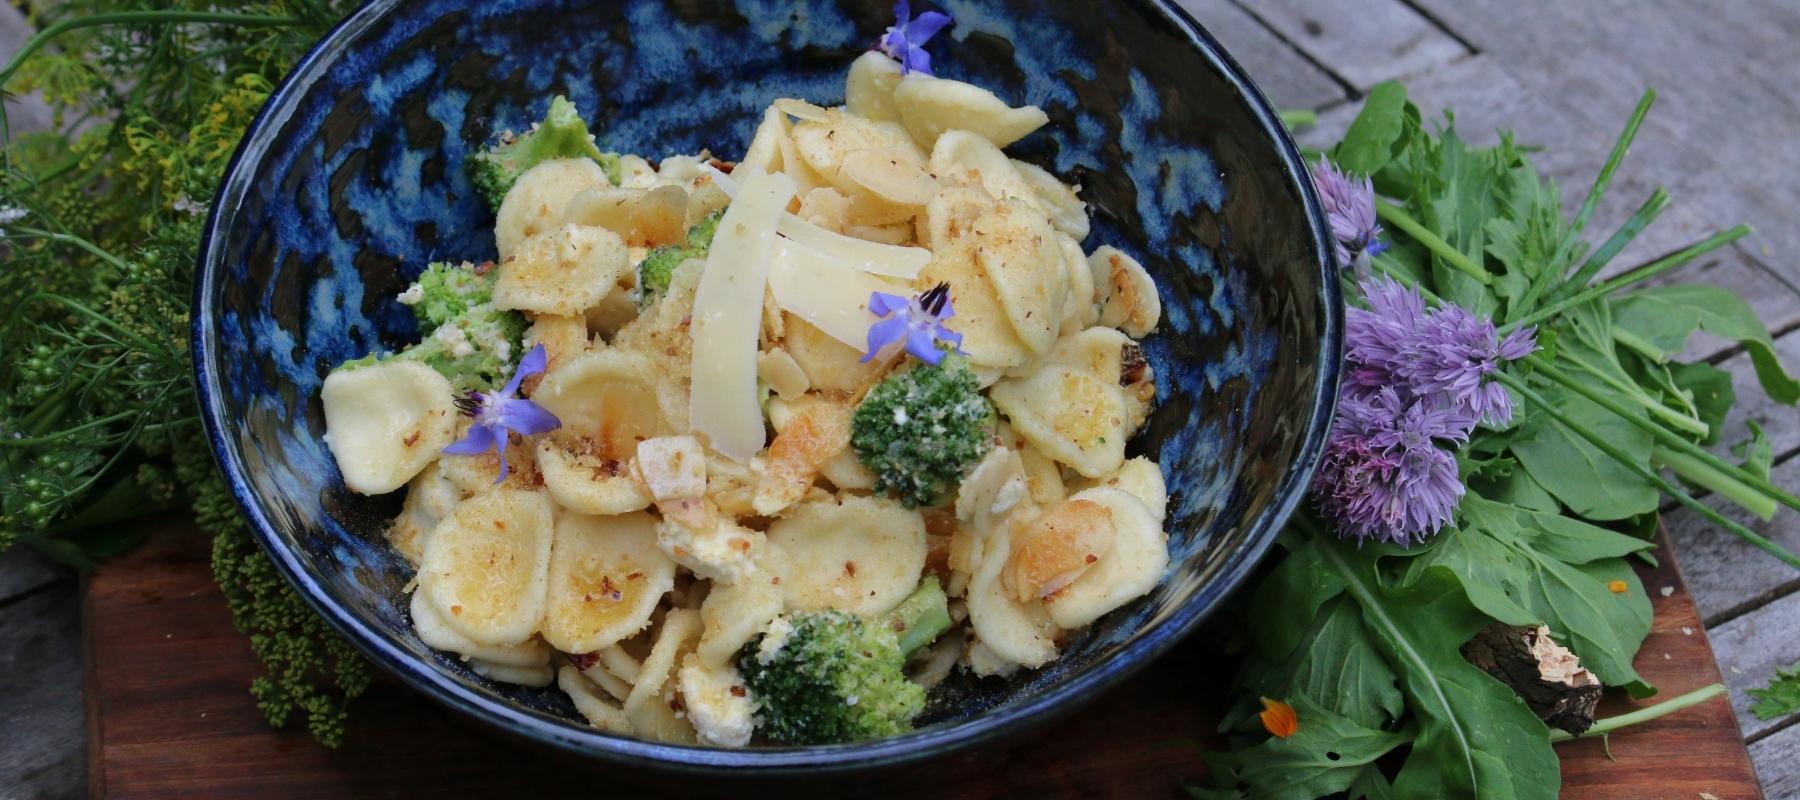 Orecchiette with broccoli, almonds and goats cheese